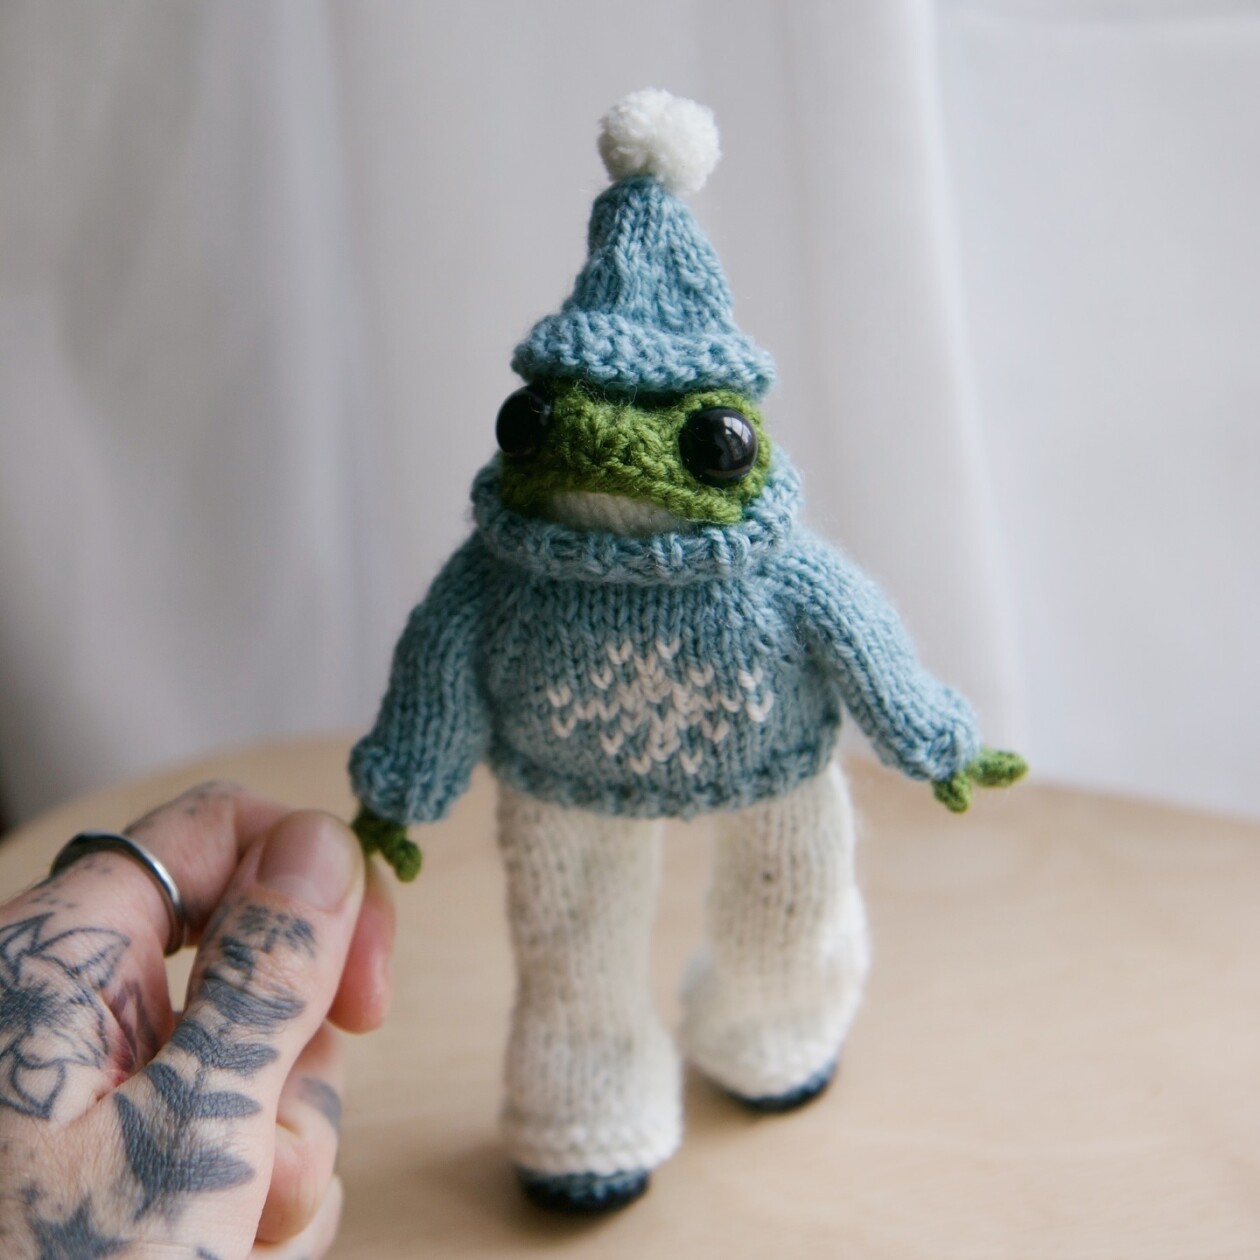 Enchanting Anthropomorphized Frog Crochet Patterns By Elliot (9)